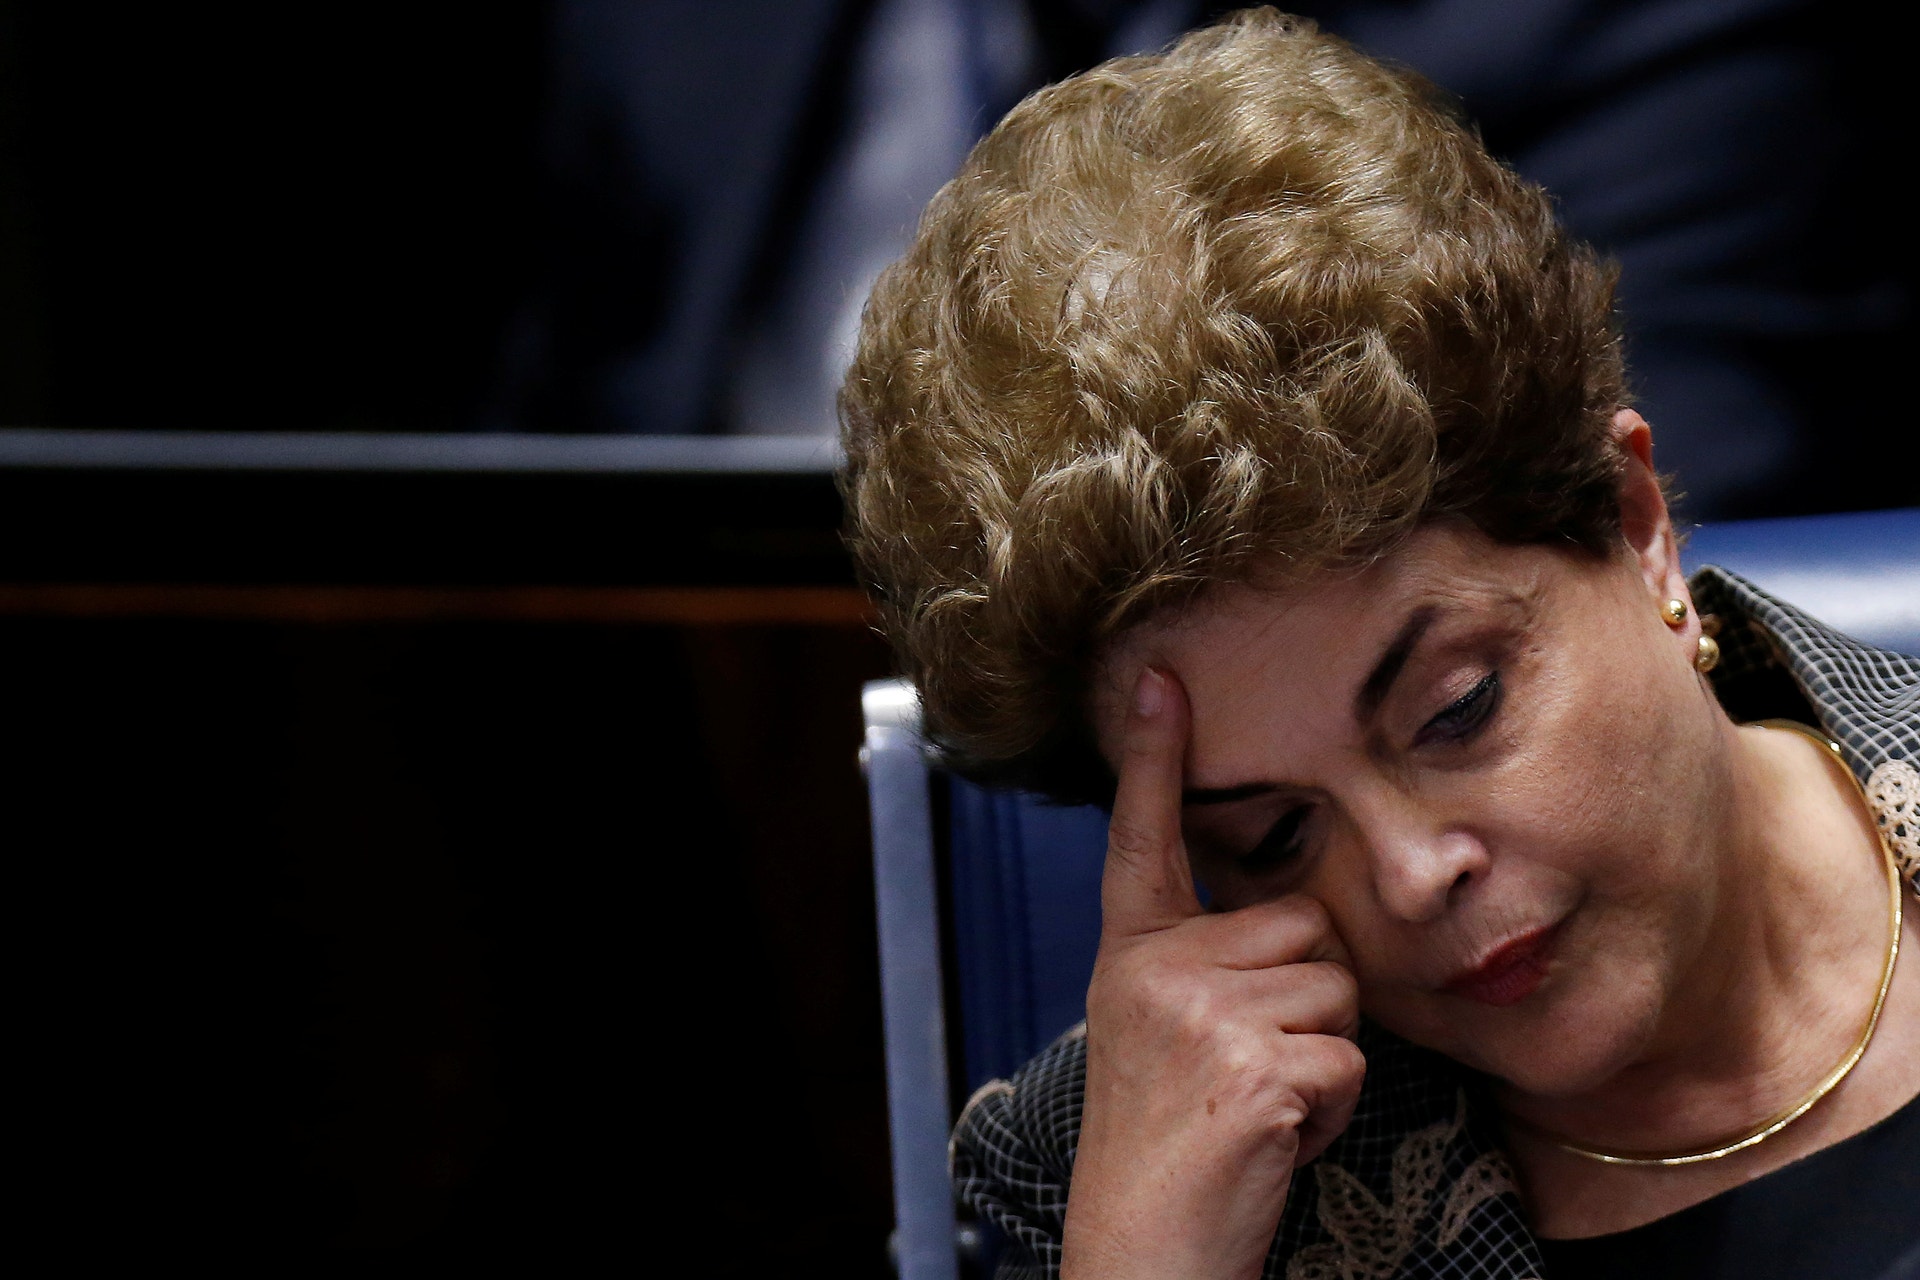  A presidente brasileira foi considerada culpada dos crimes de responsabilidade por empr&eacute;stimos financeiros e a abertura de cr&eacute;ditos sem autoriza&ccedil;&atilde;o do congresso. / Foto: Reuters 